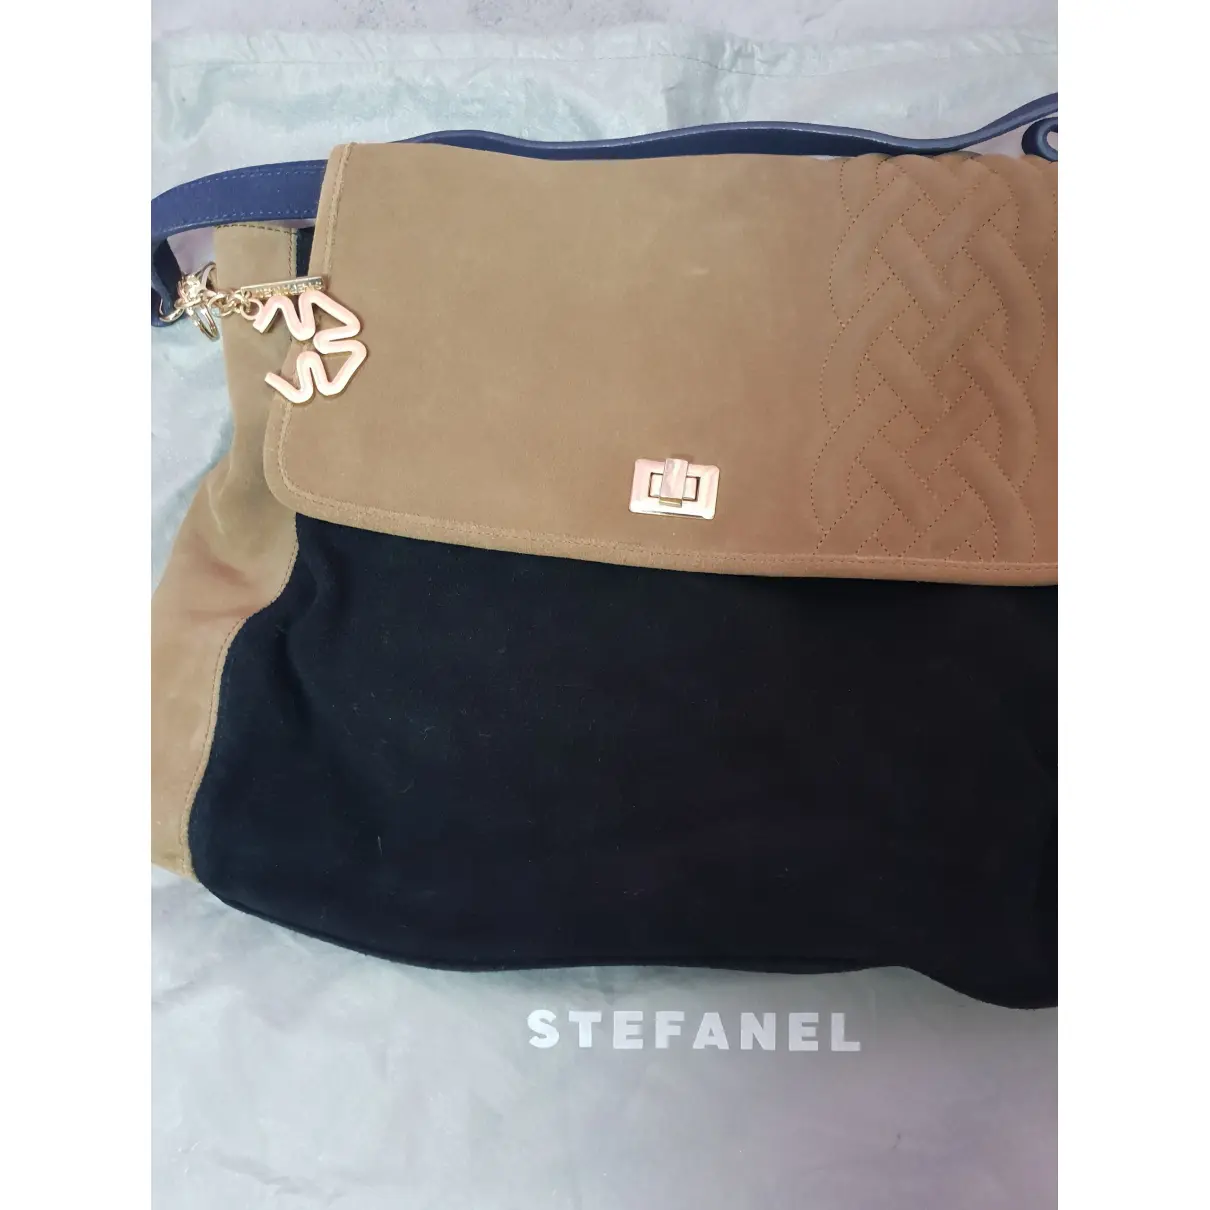 Buy STEFANEL Handbag online